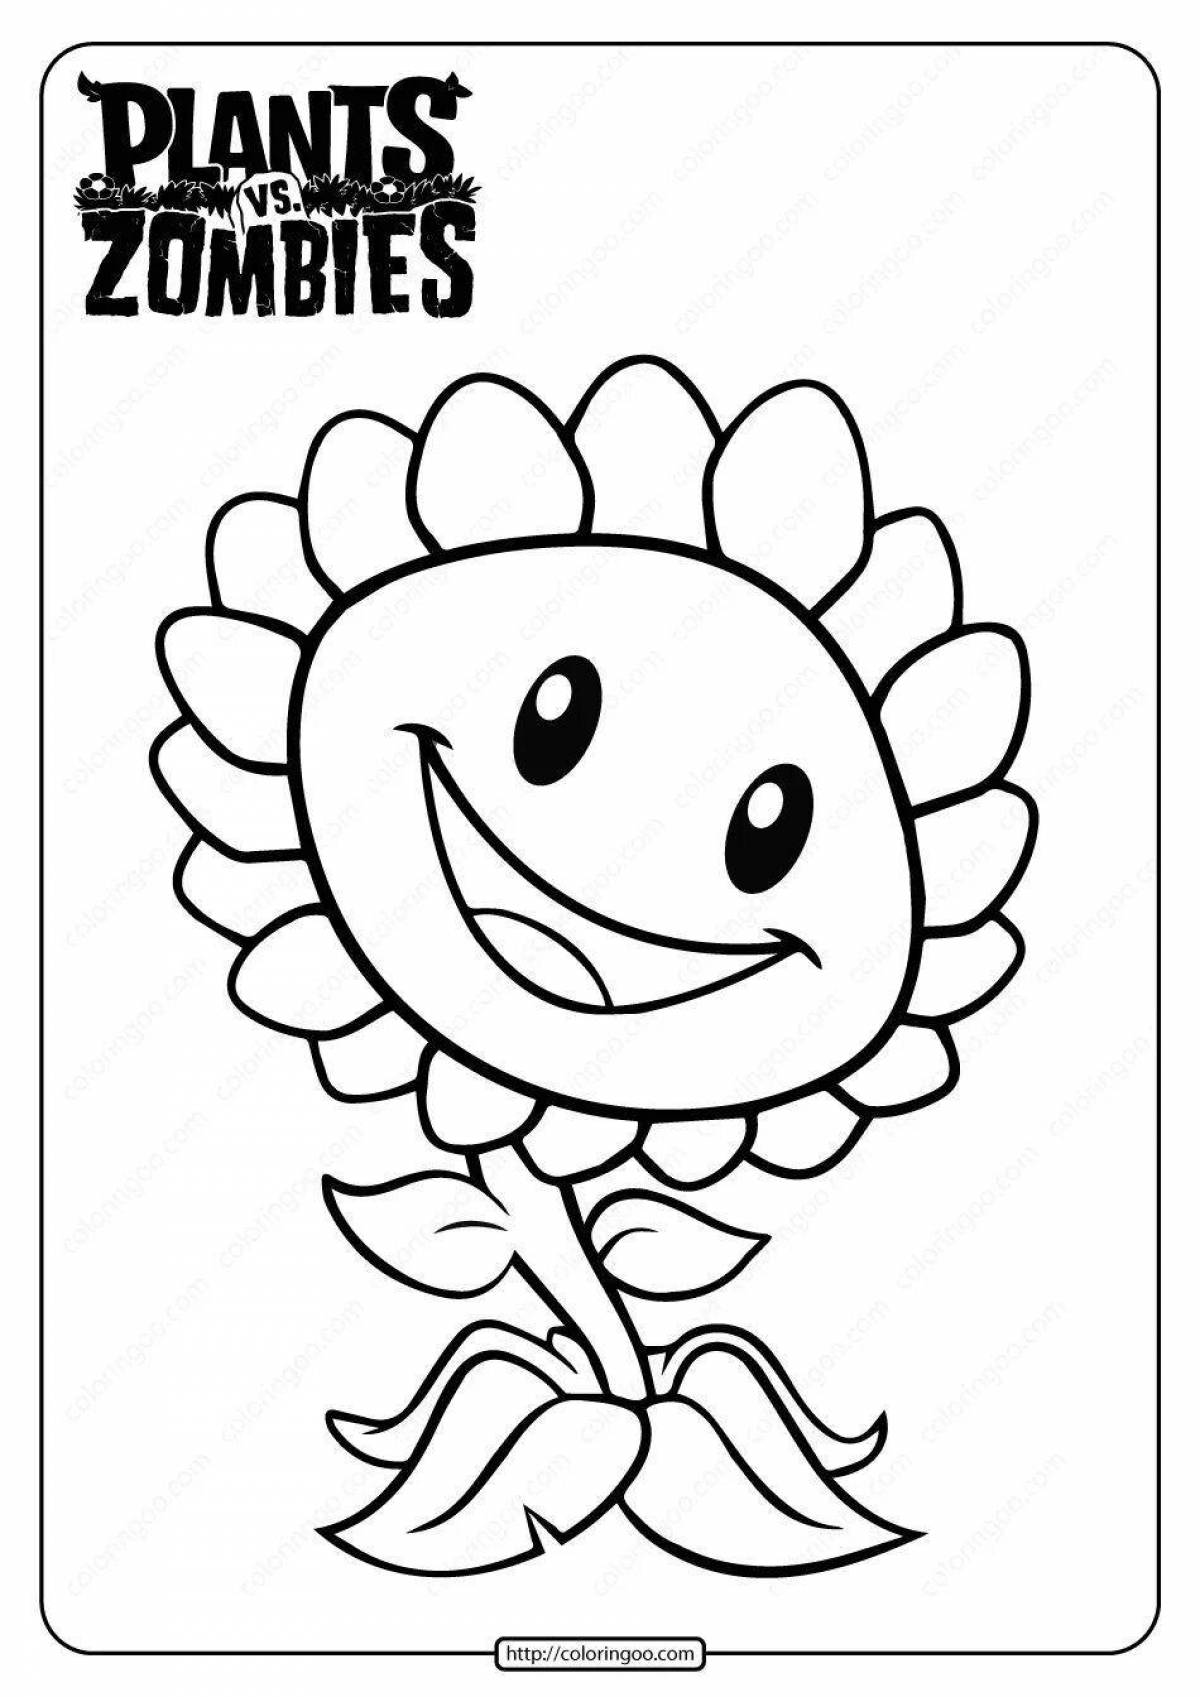 Fun coloring plants vs zombies all plants